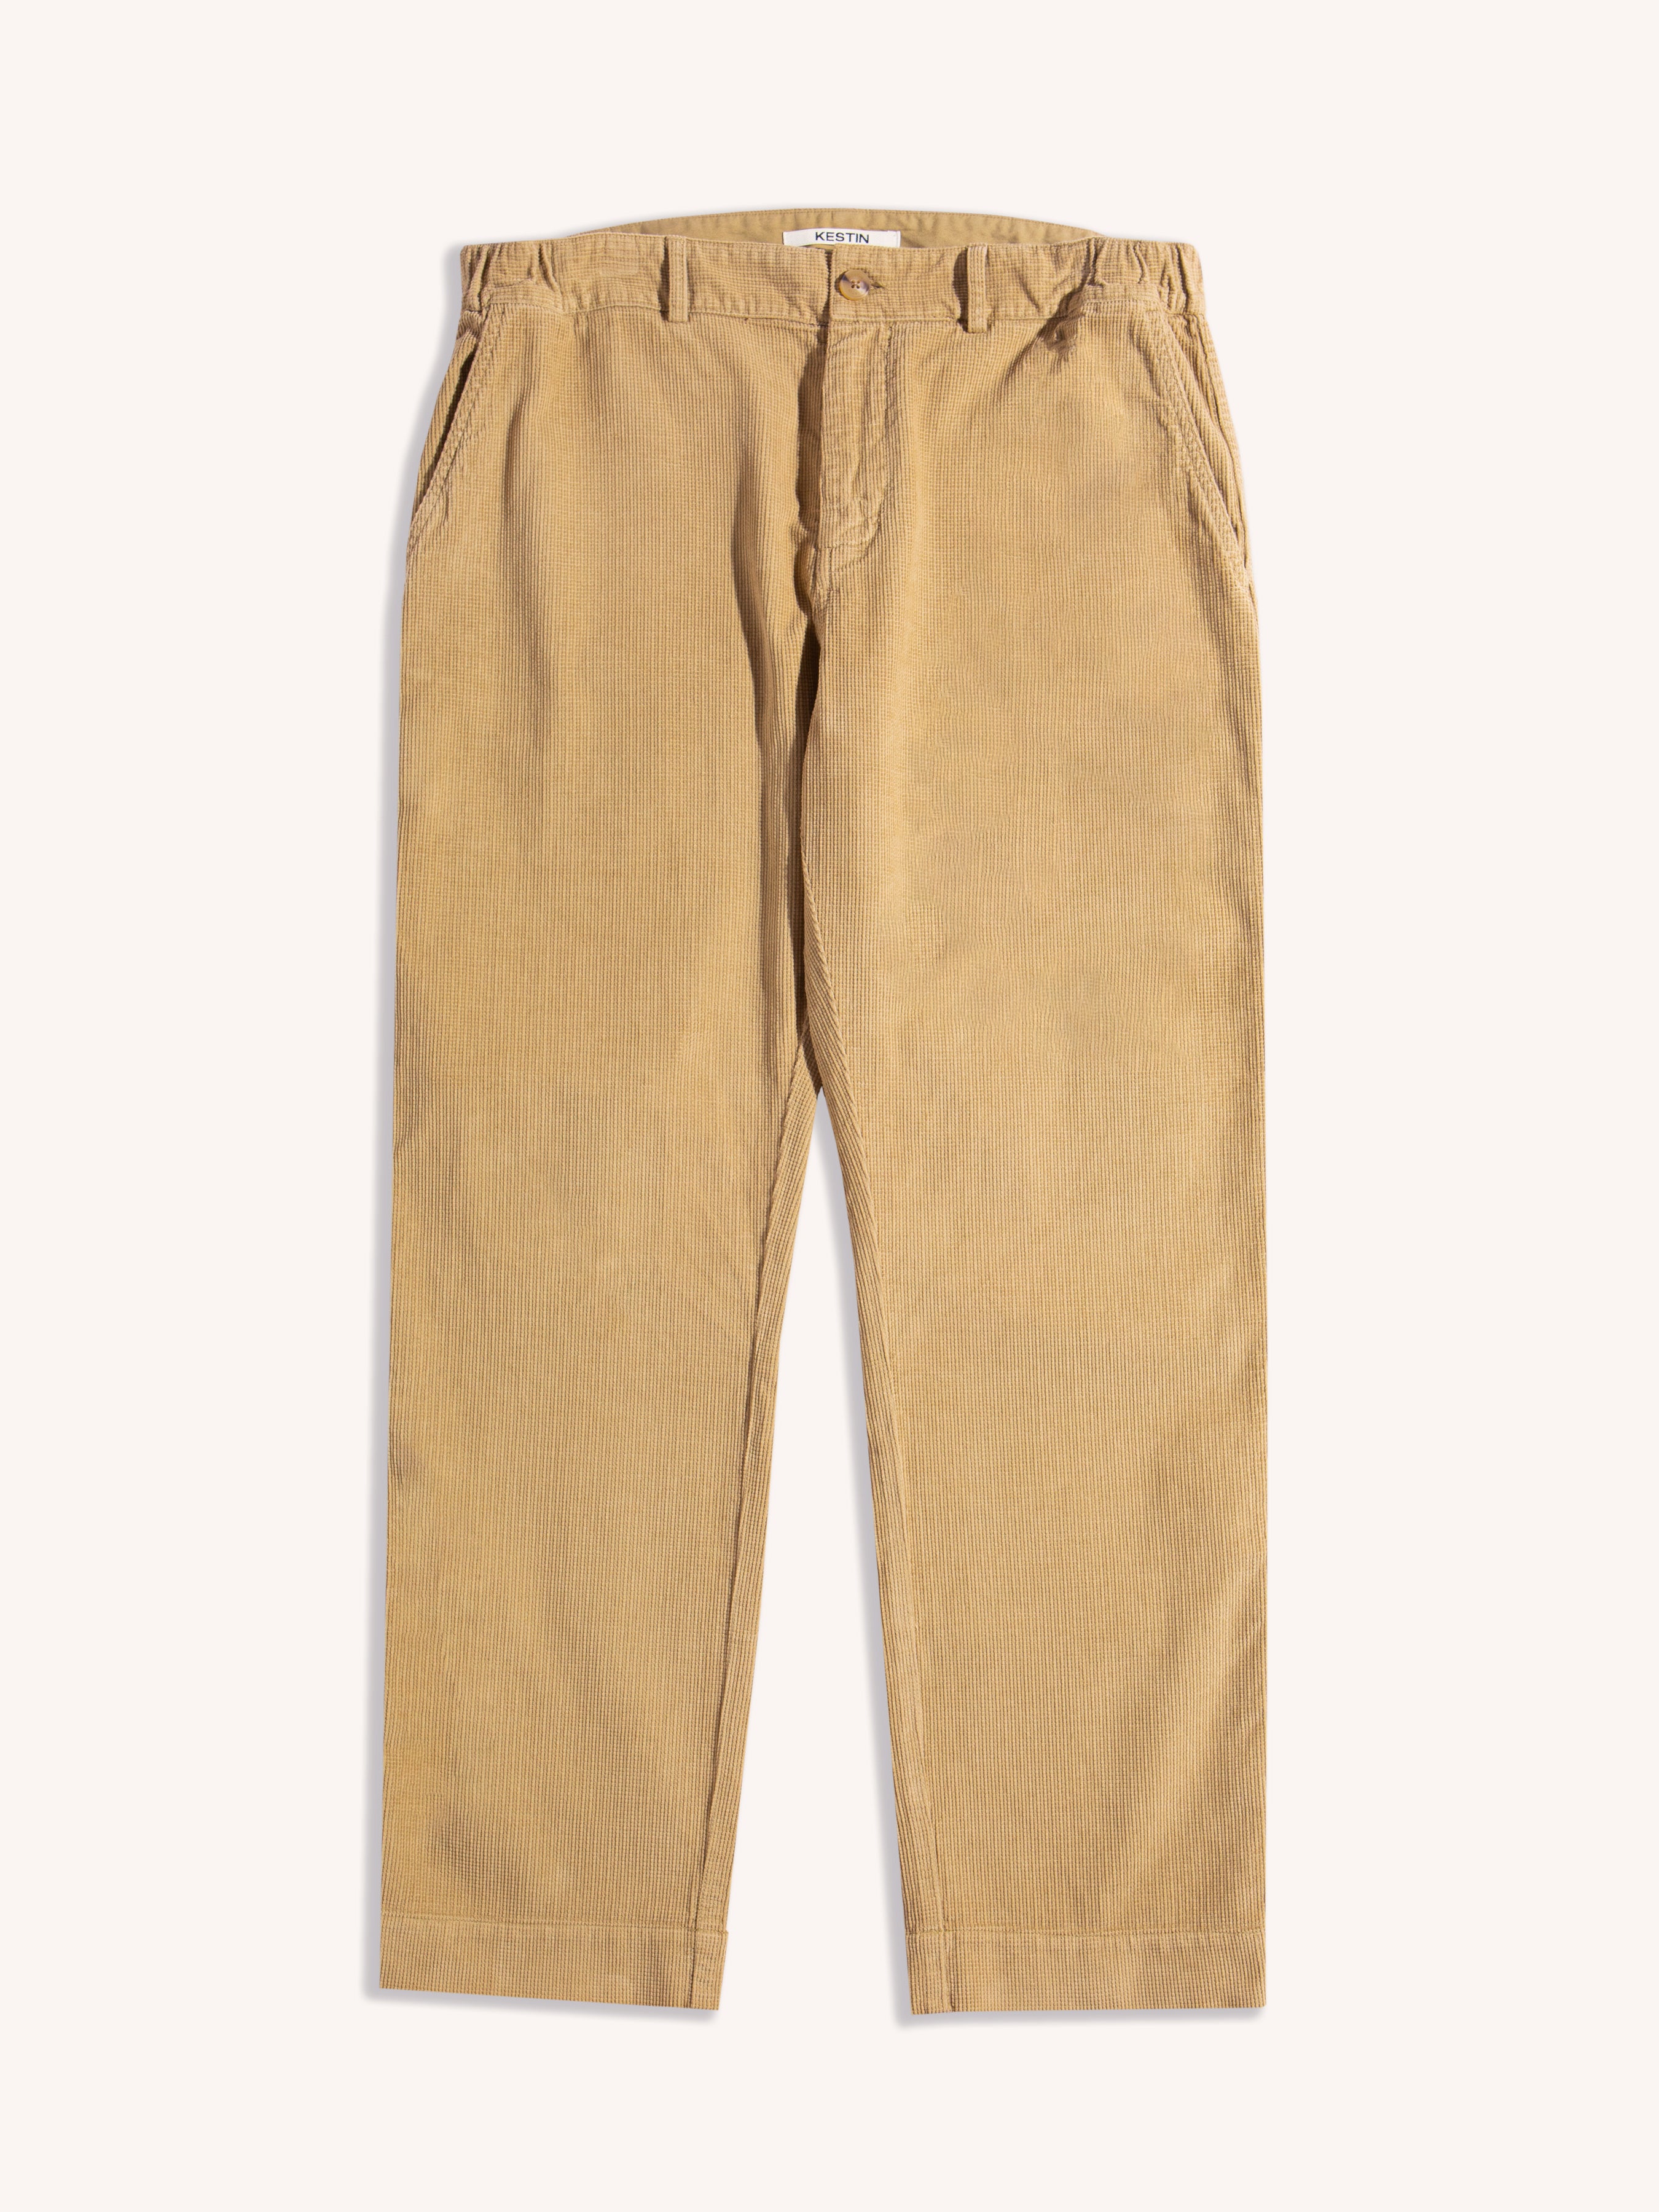 A pair of corduroy trousers by premium menswear designer KESTIN.